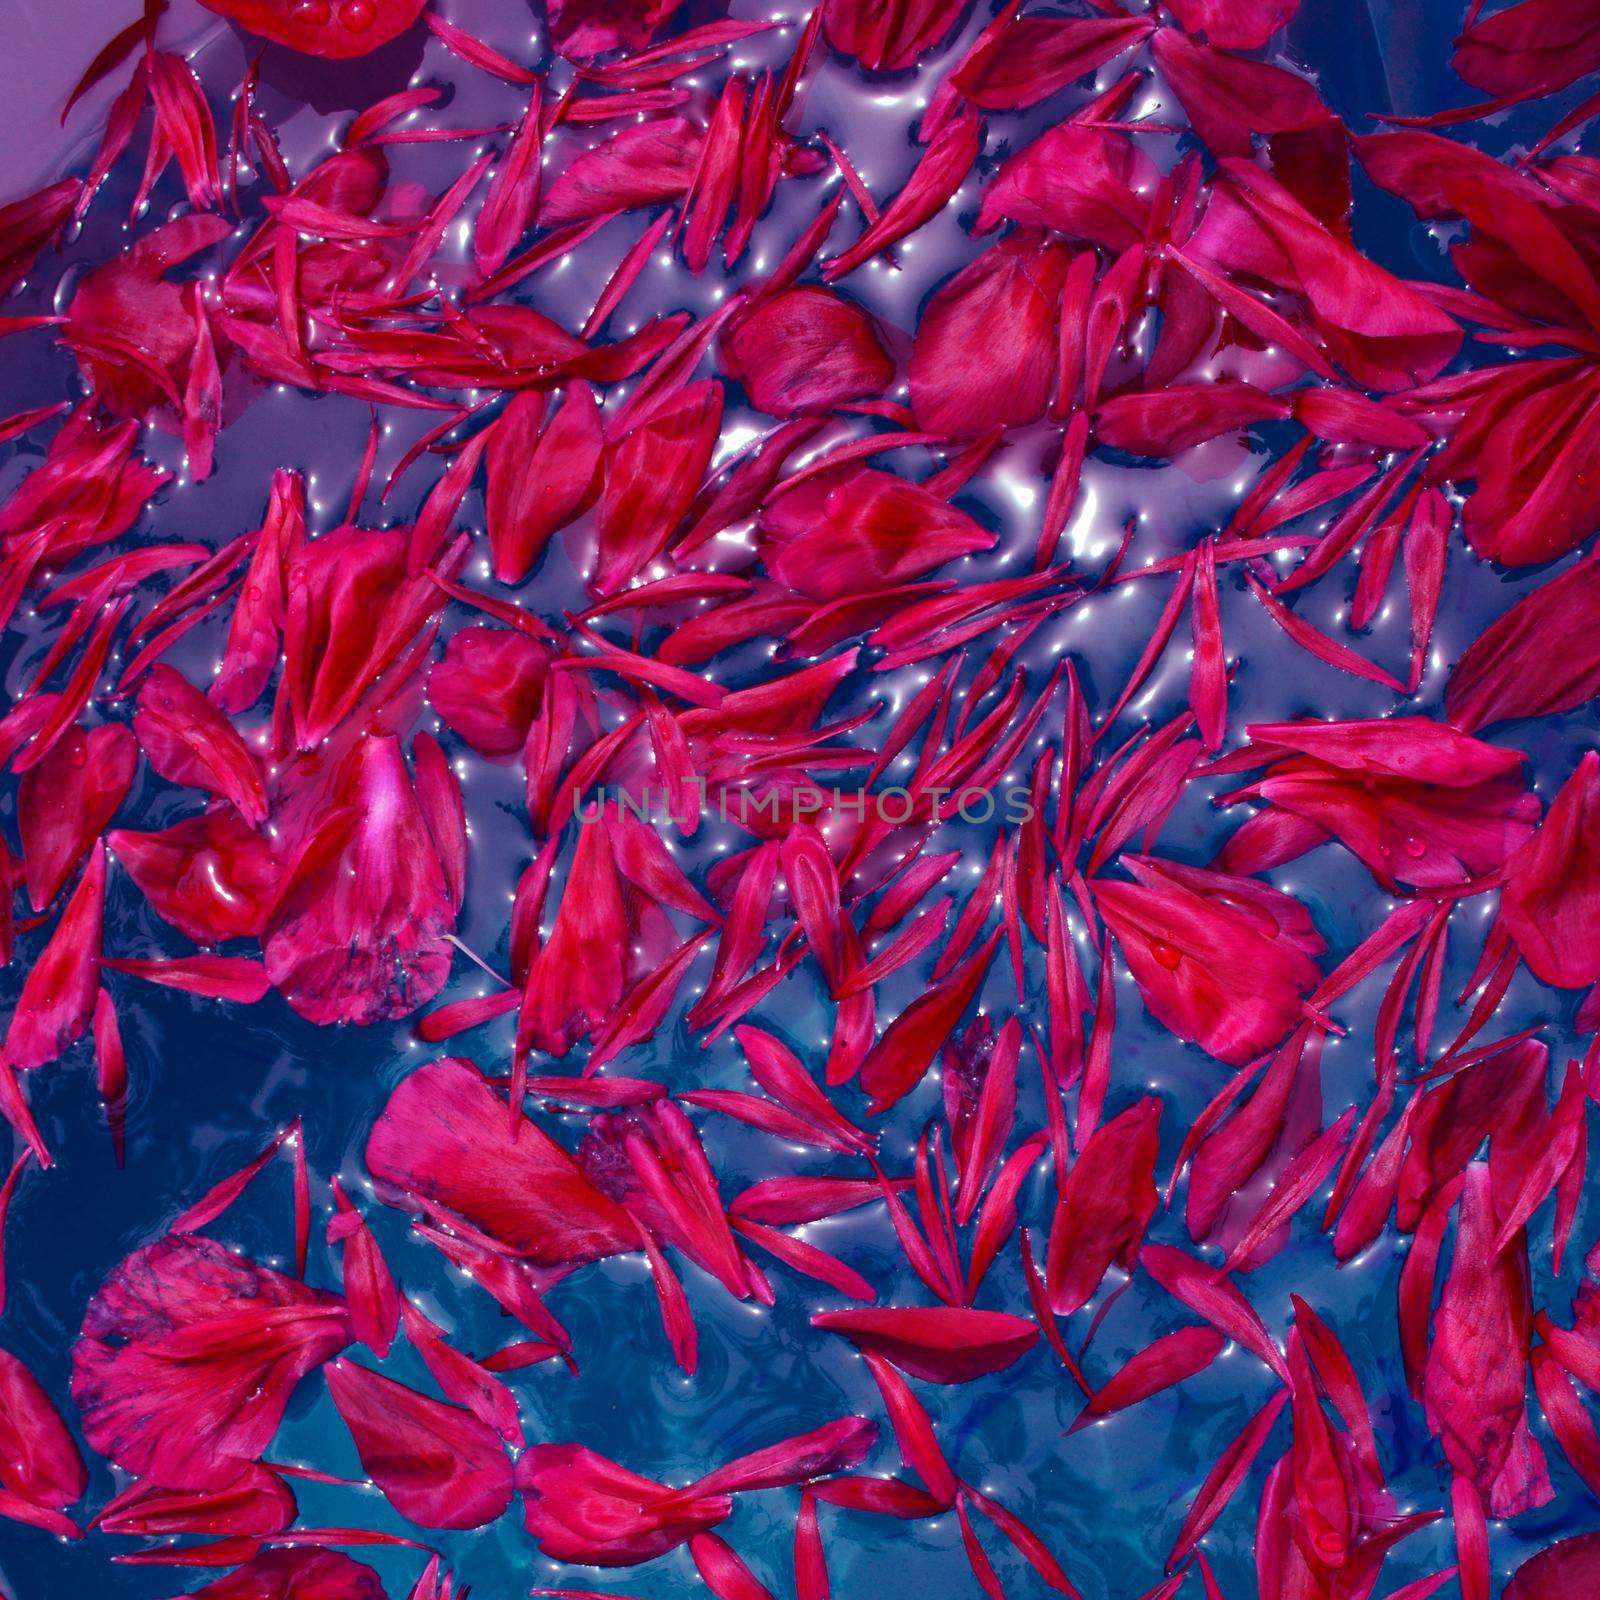 Peony petals floating on indigo water by hibrida13